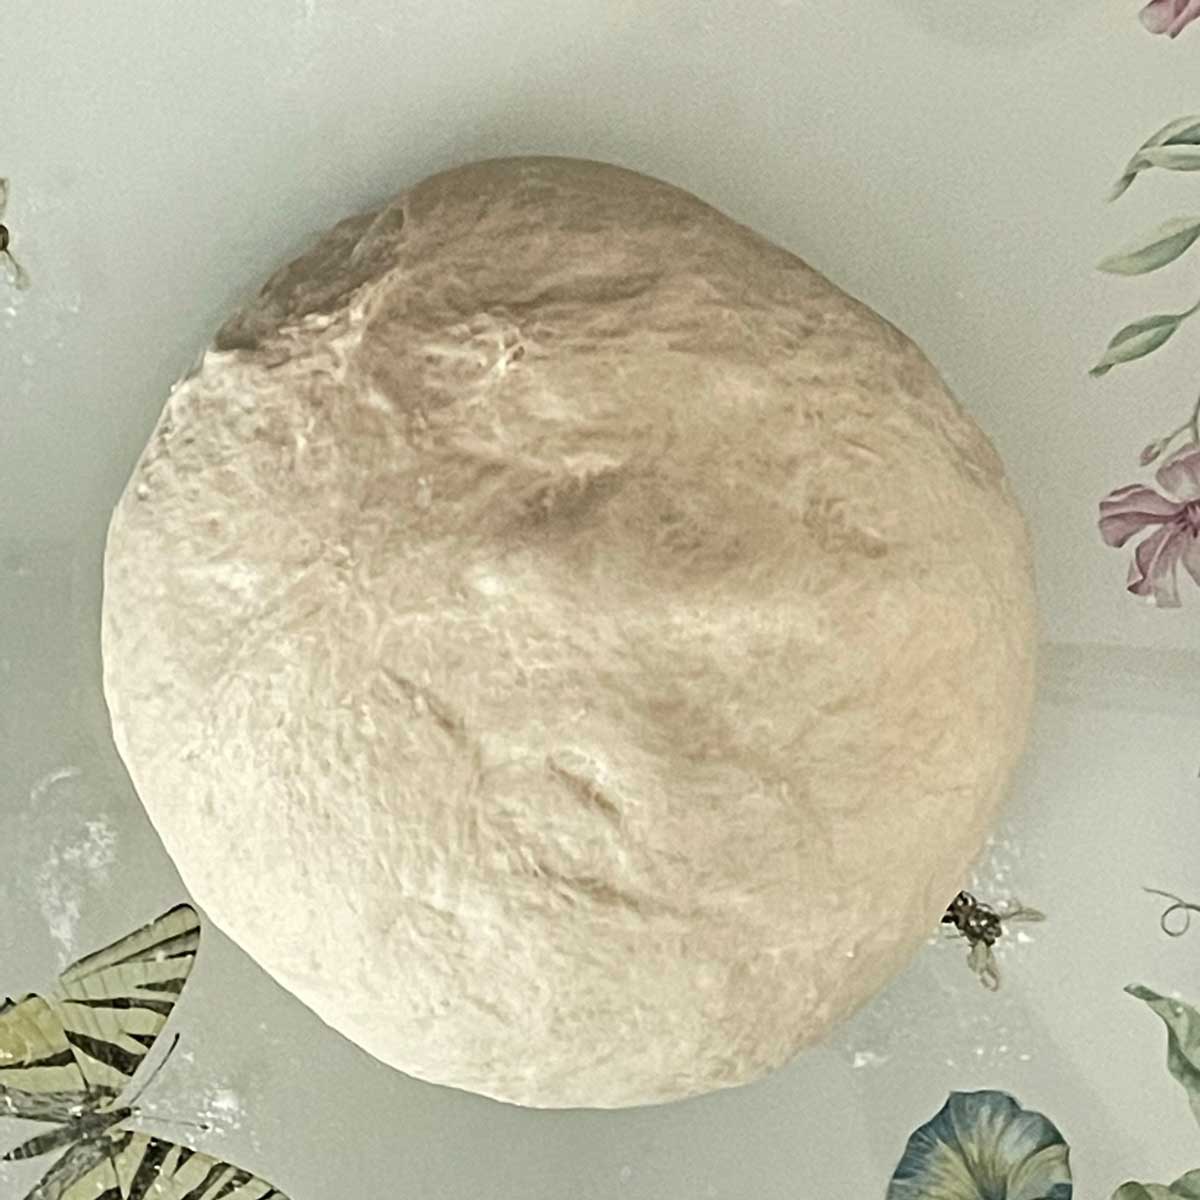 Bread bowl dough.